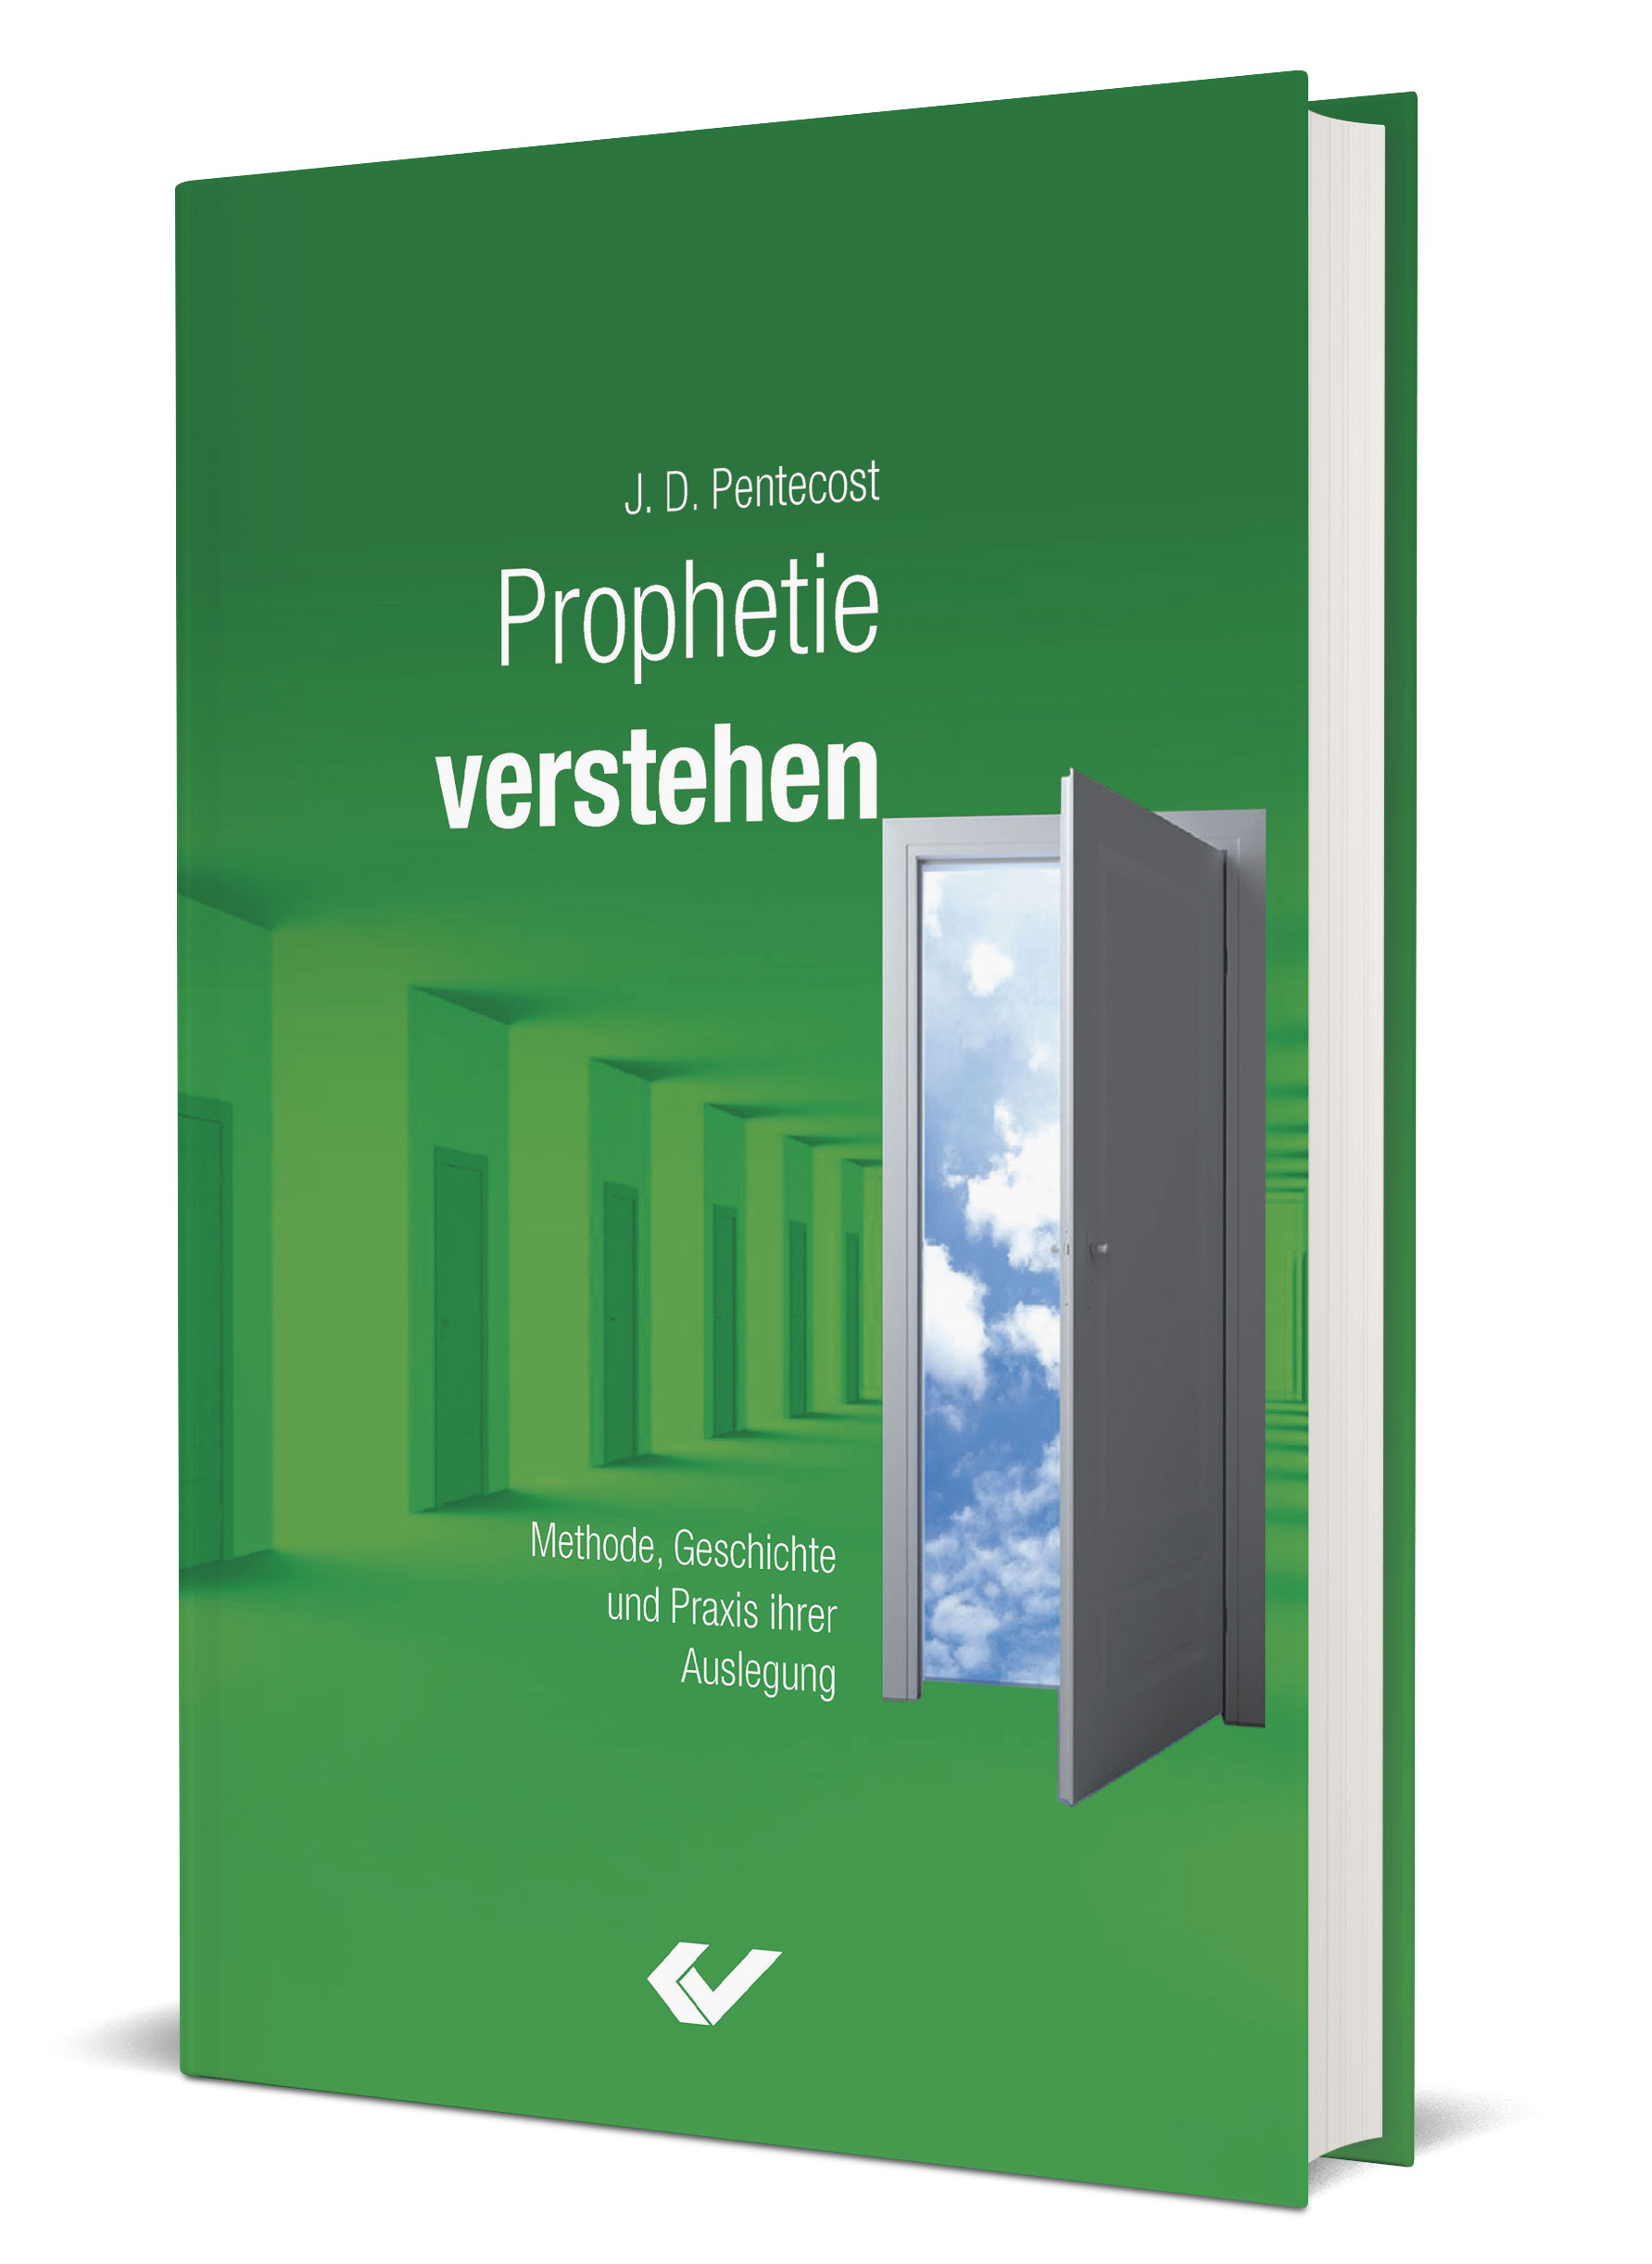 J. Dwight Pentecost: Prophetie verstehen - Methode, Geschichte und Prinzipien ihrer Auslegung